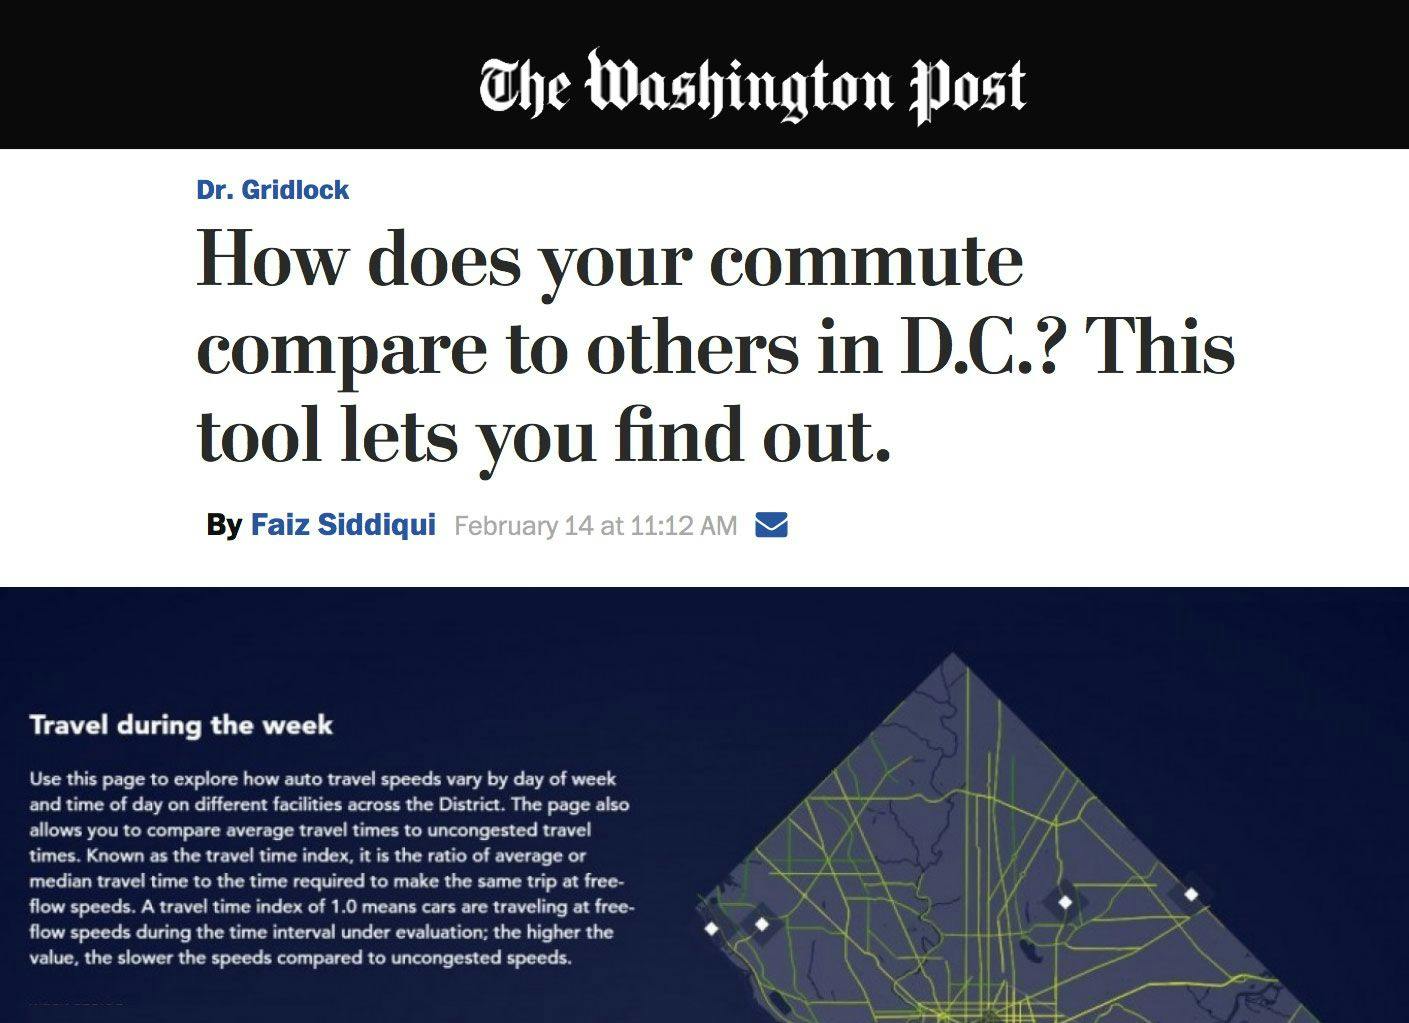 Image for Washington Post publicity item